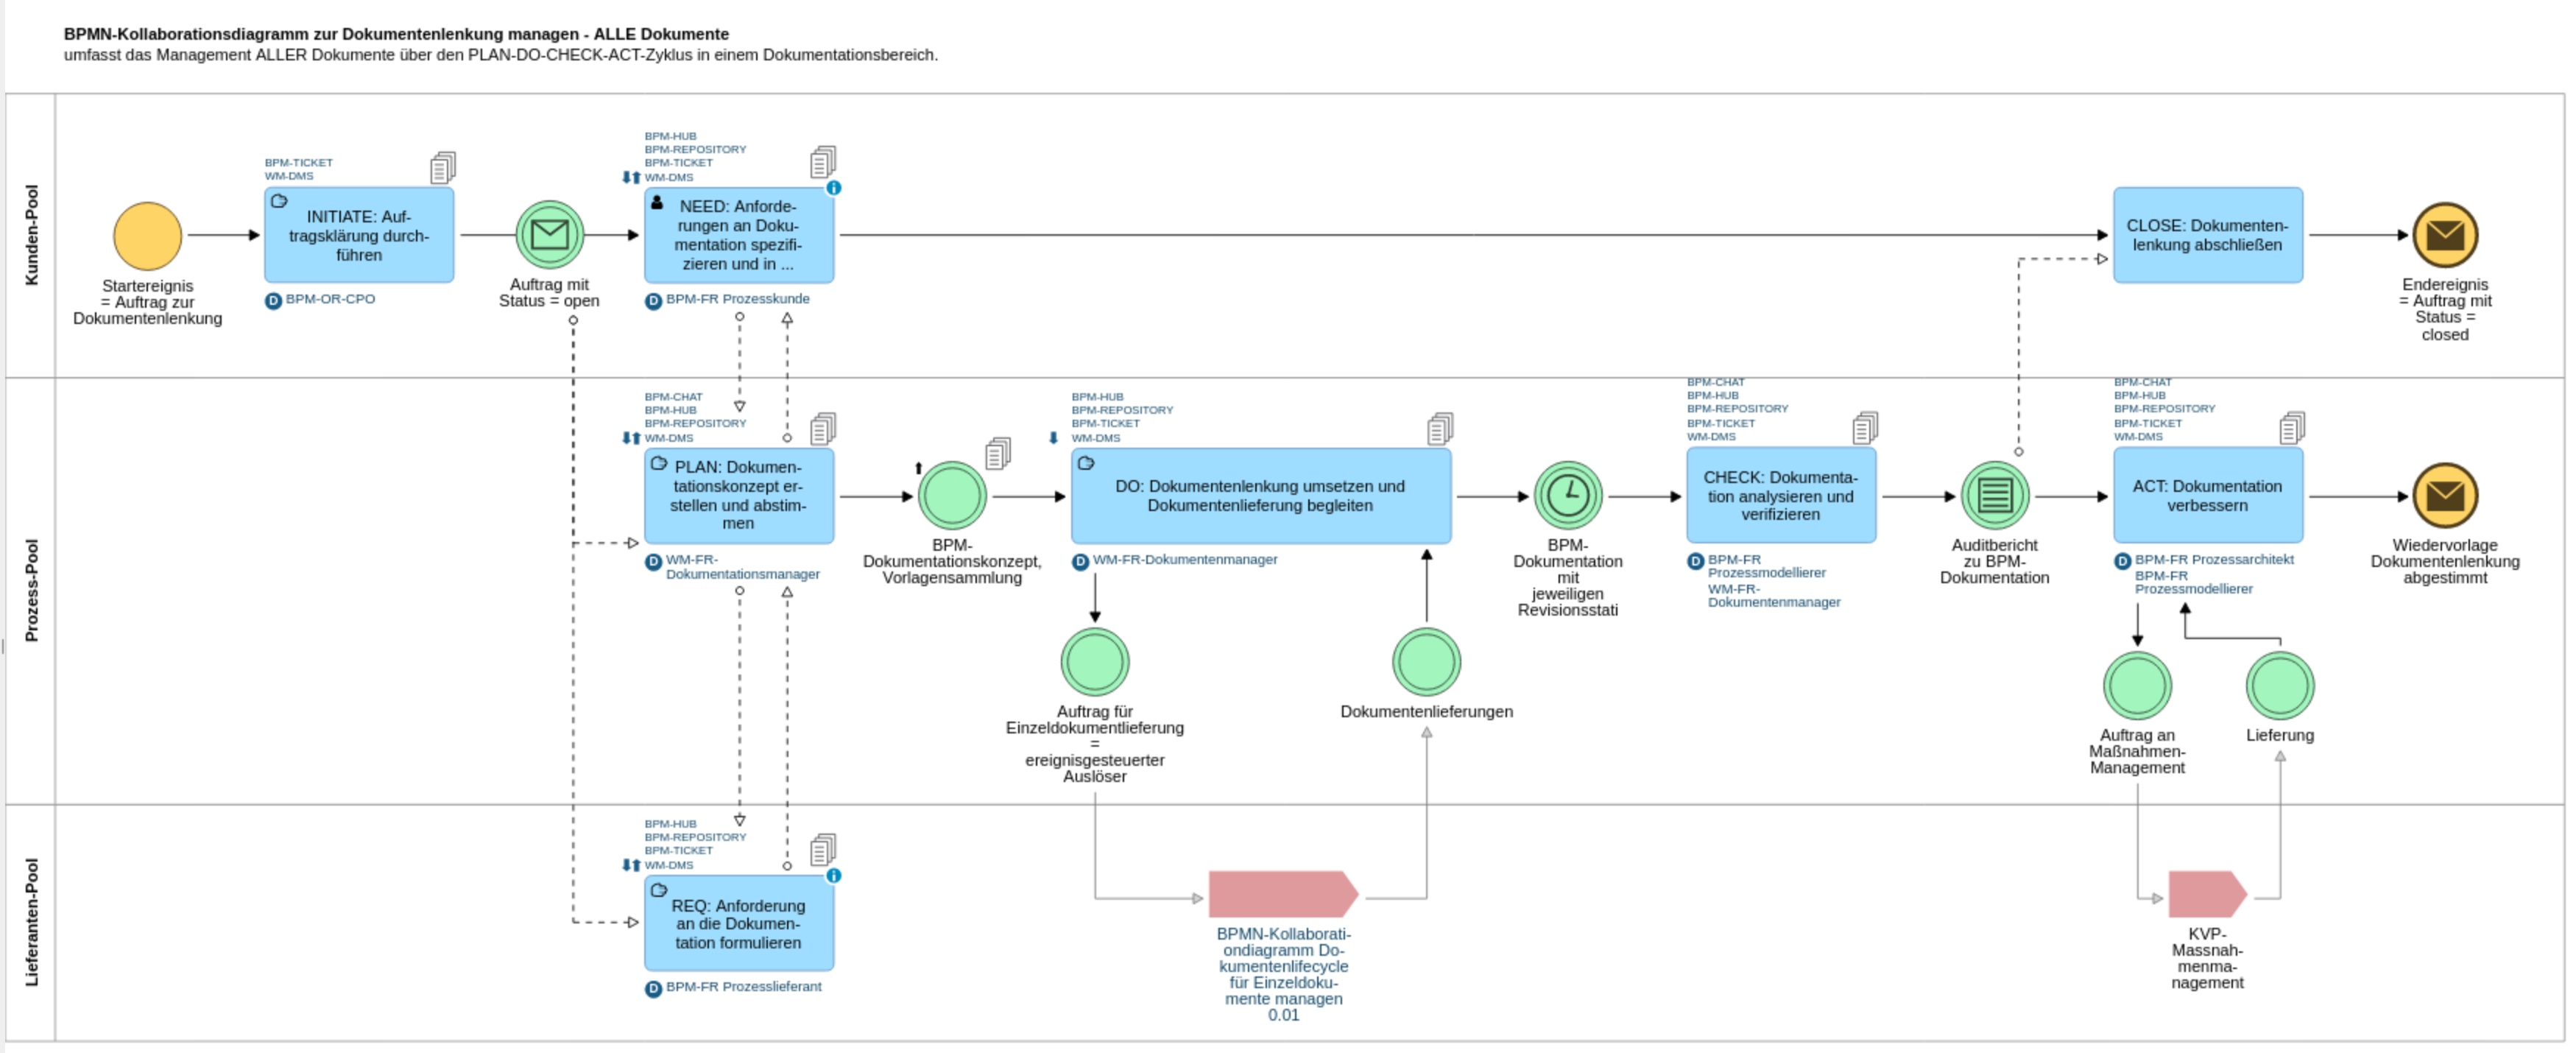 BPMN-Kollaborations-Diagramm Dokumentenlenkung